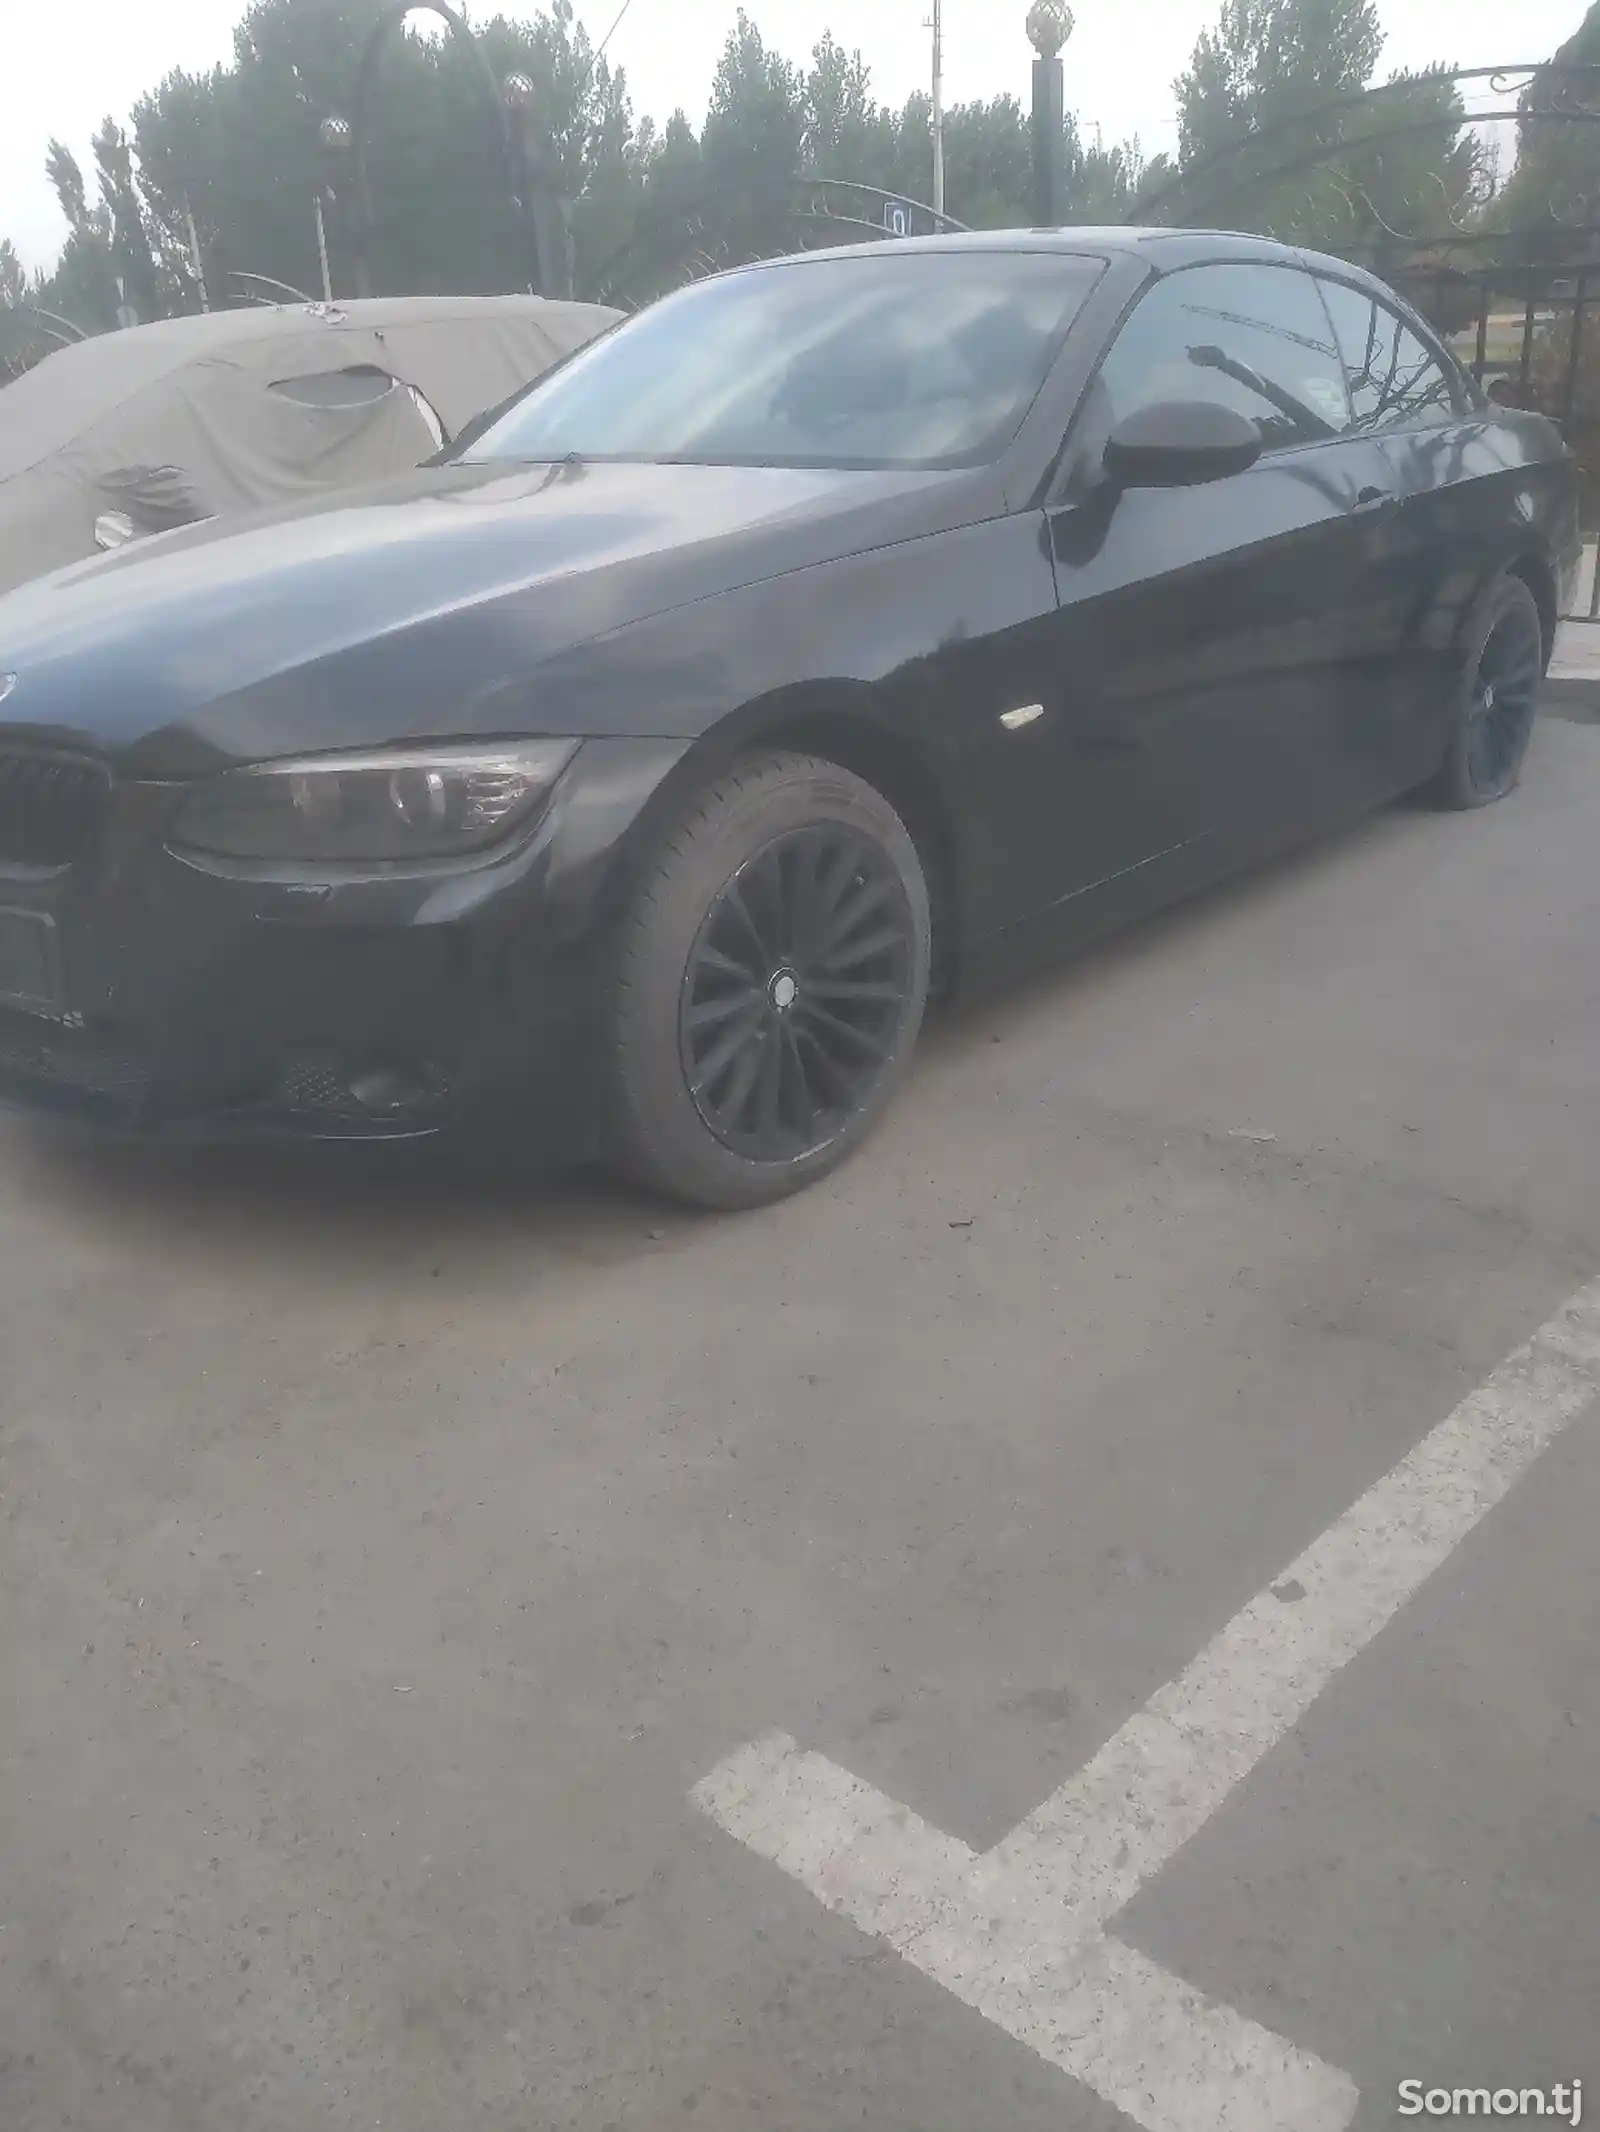 BMW 3 series, 2012-2